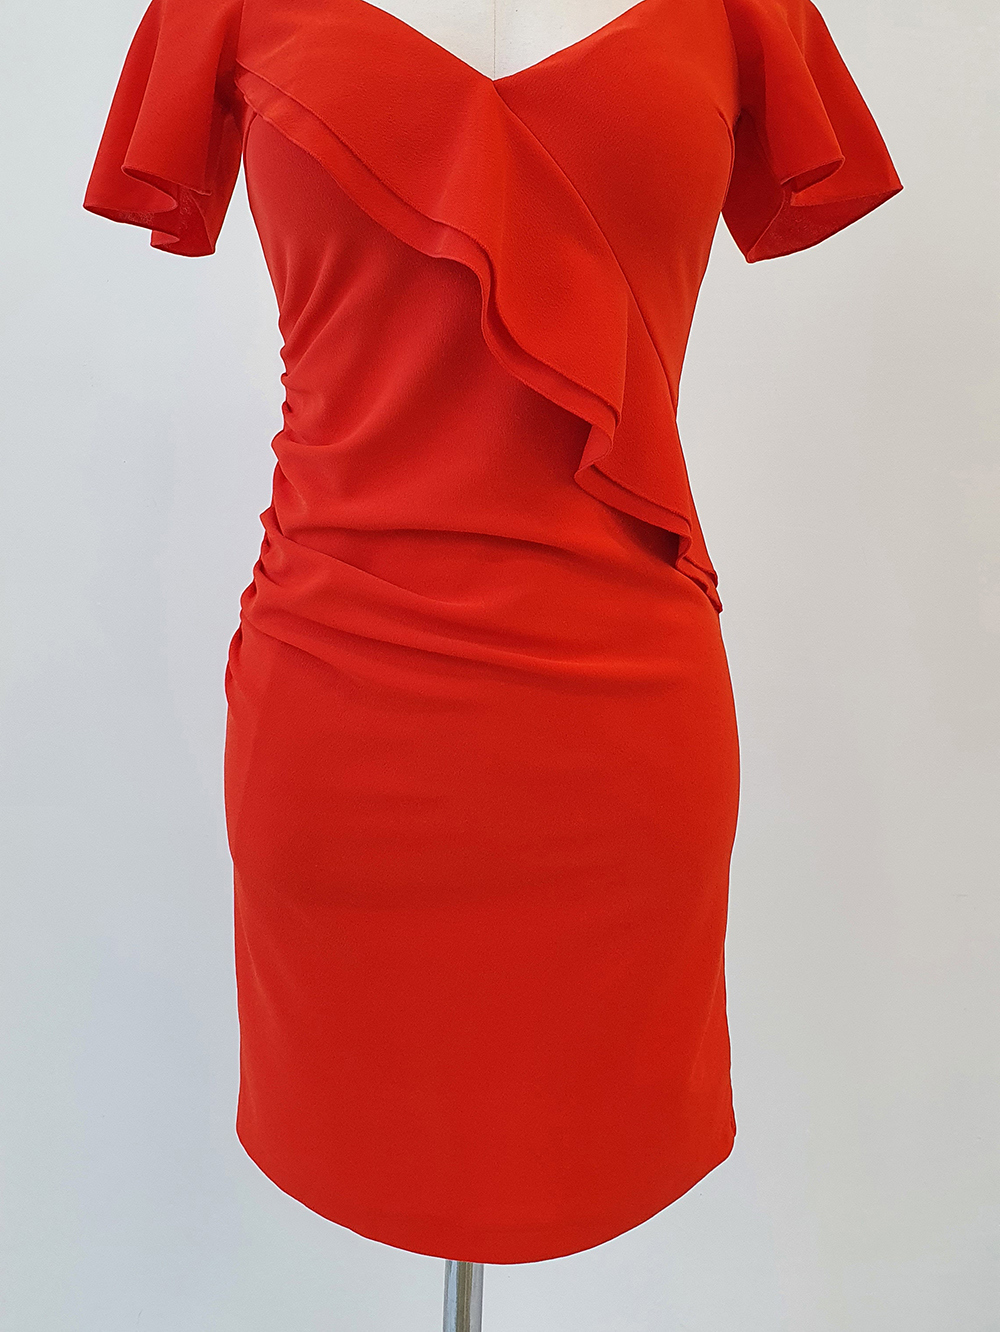 dress red color image-S1L16